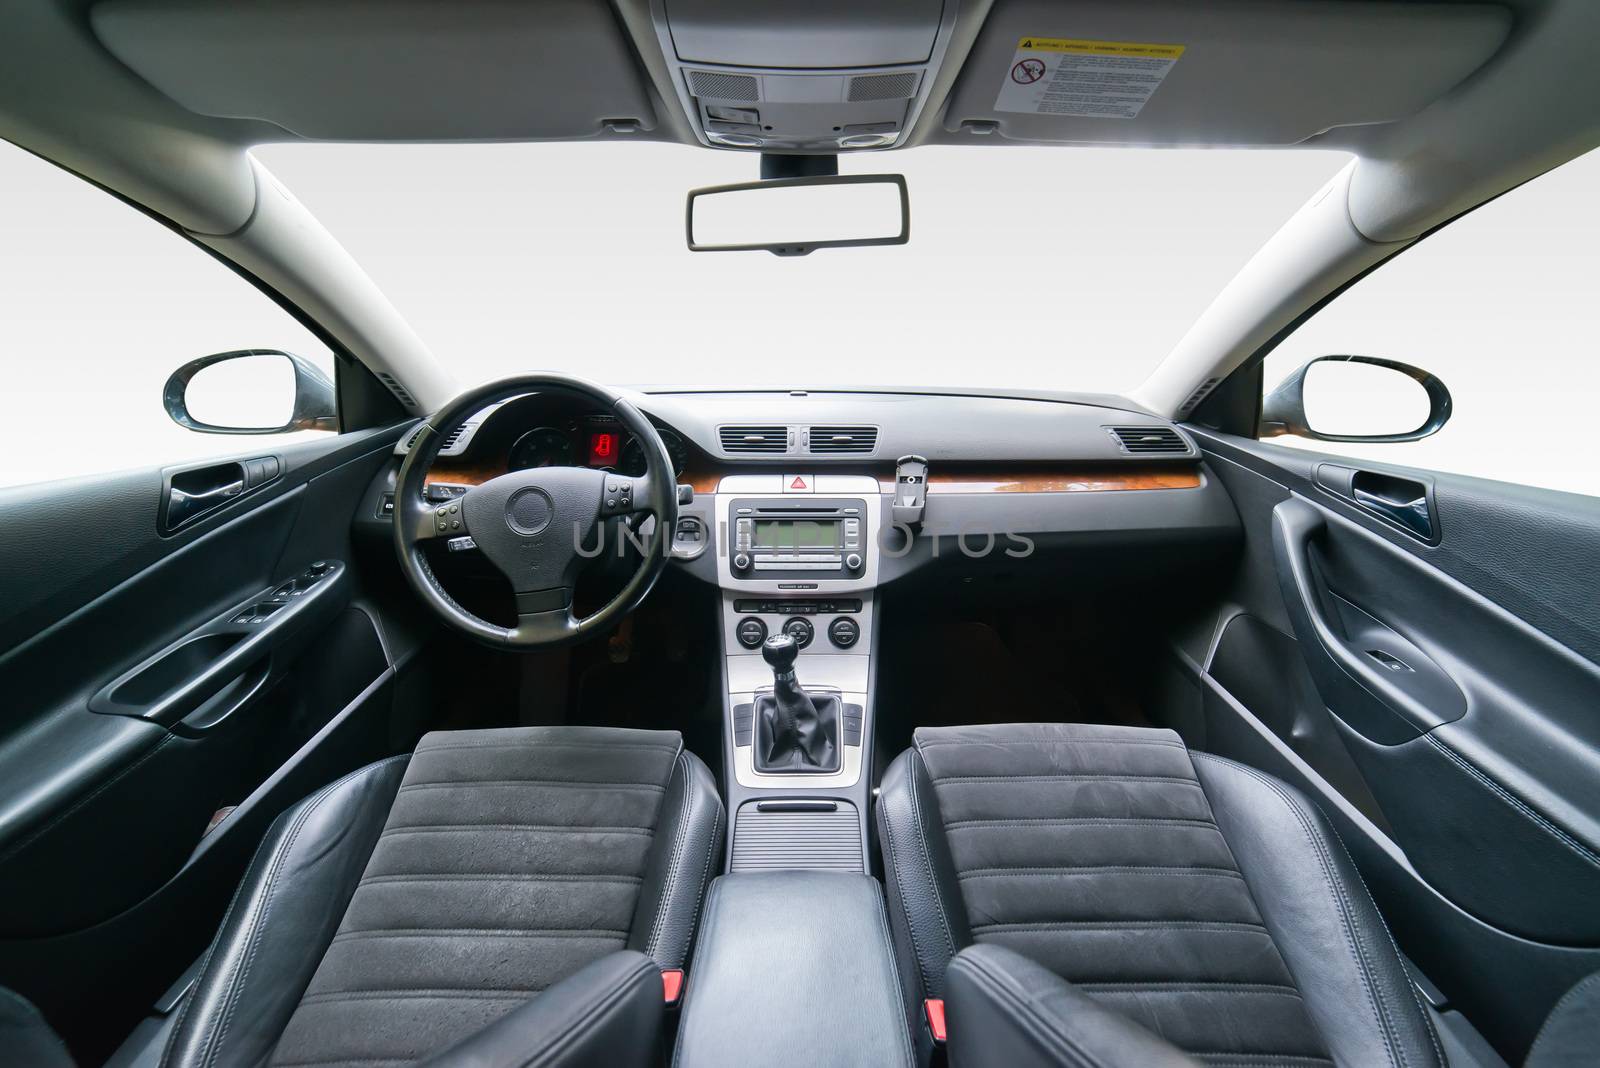 Interior of luxury car by furzyk73